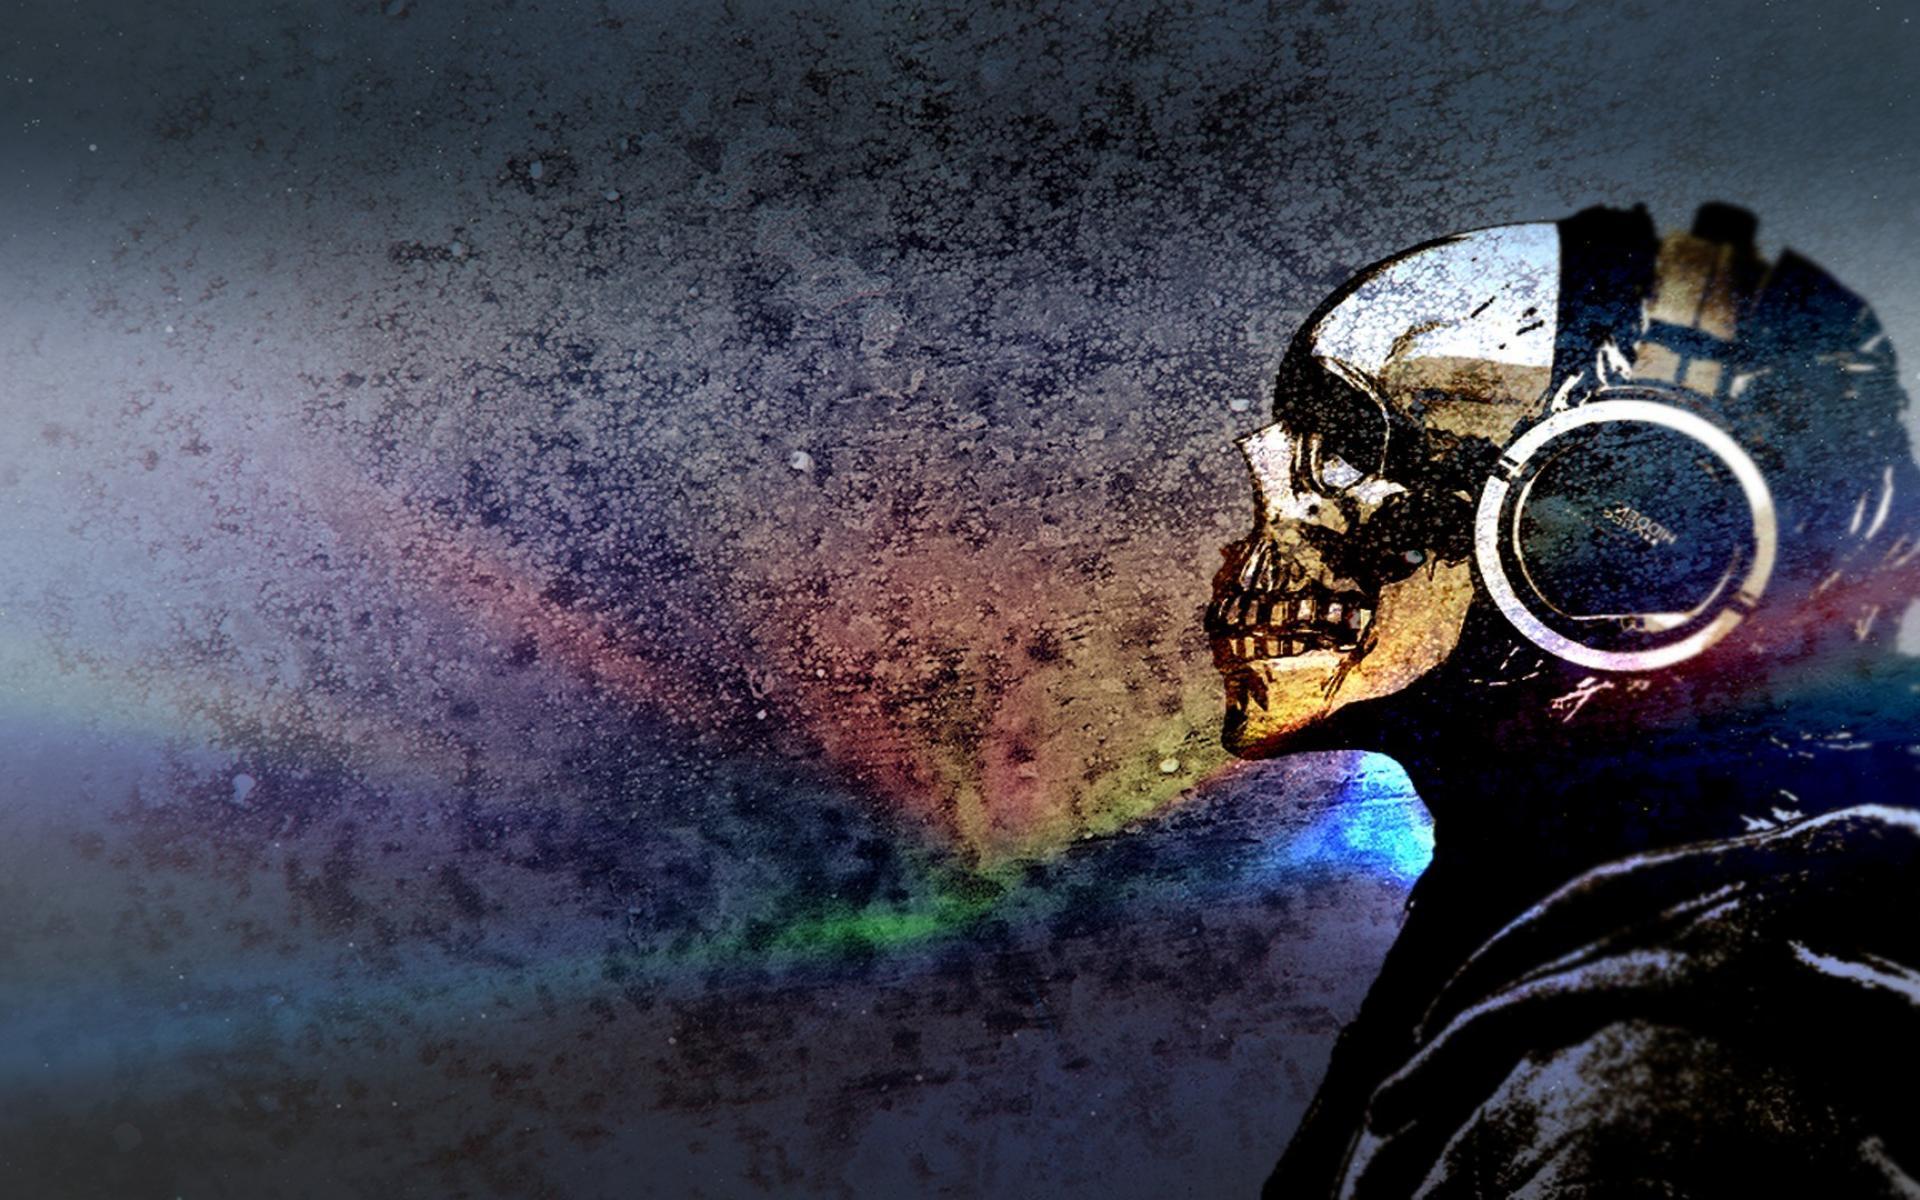 Skull With Headphones Wallpapers